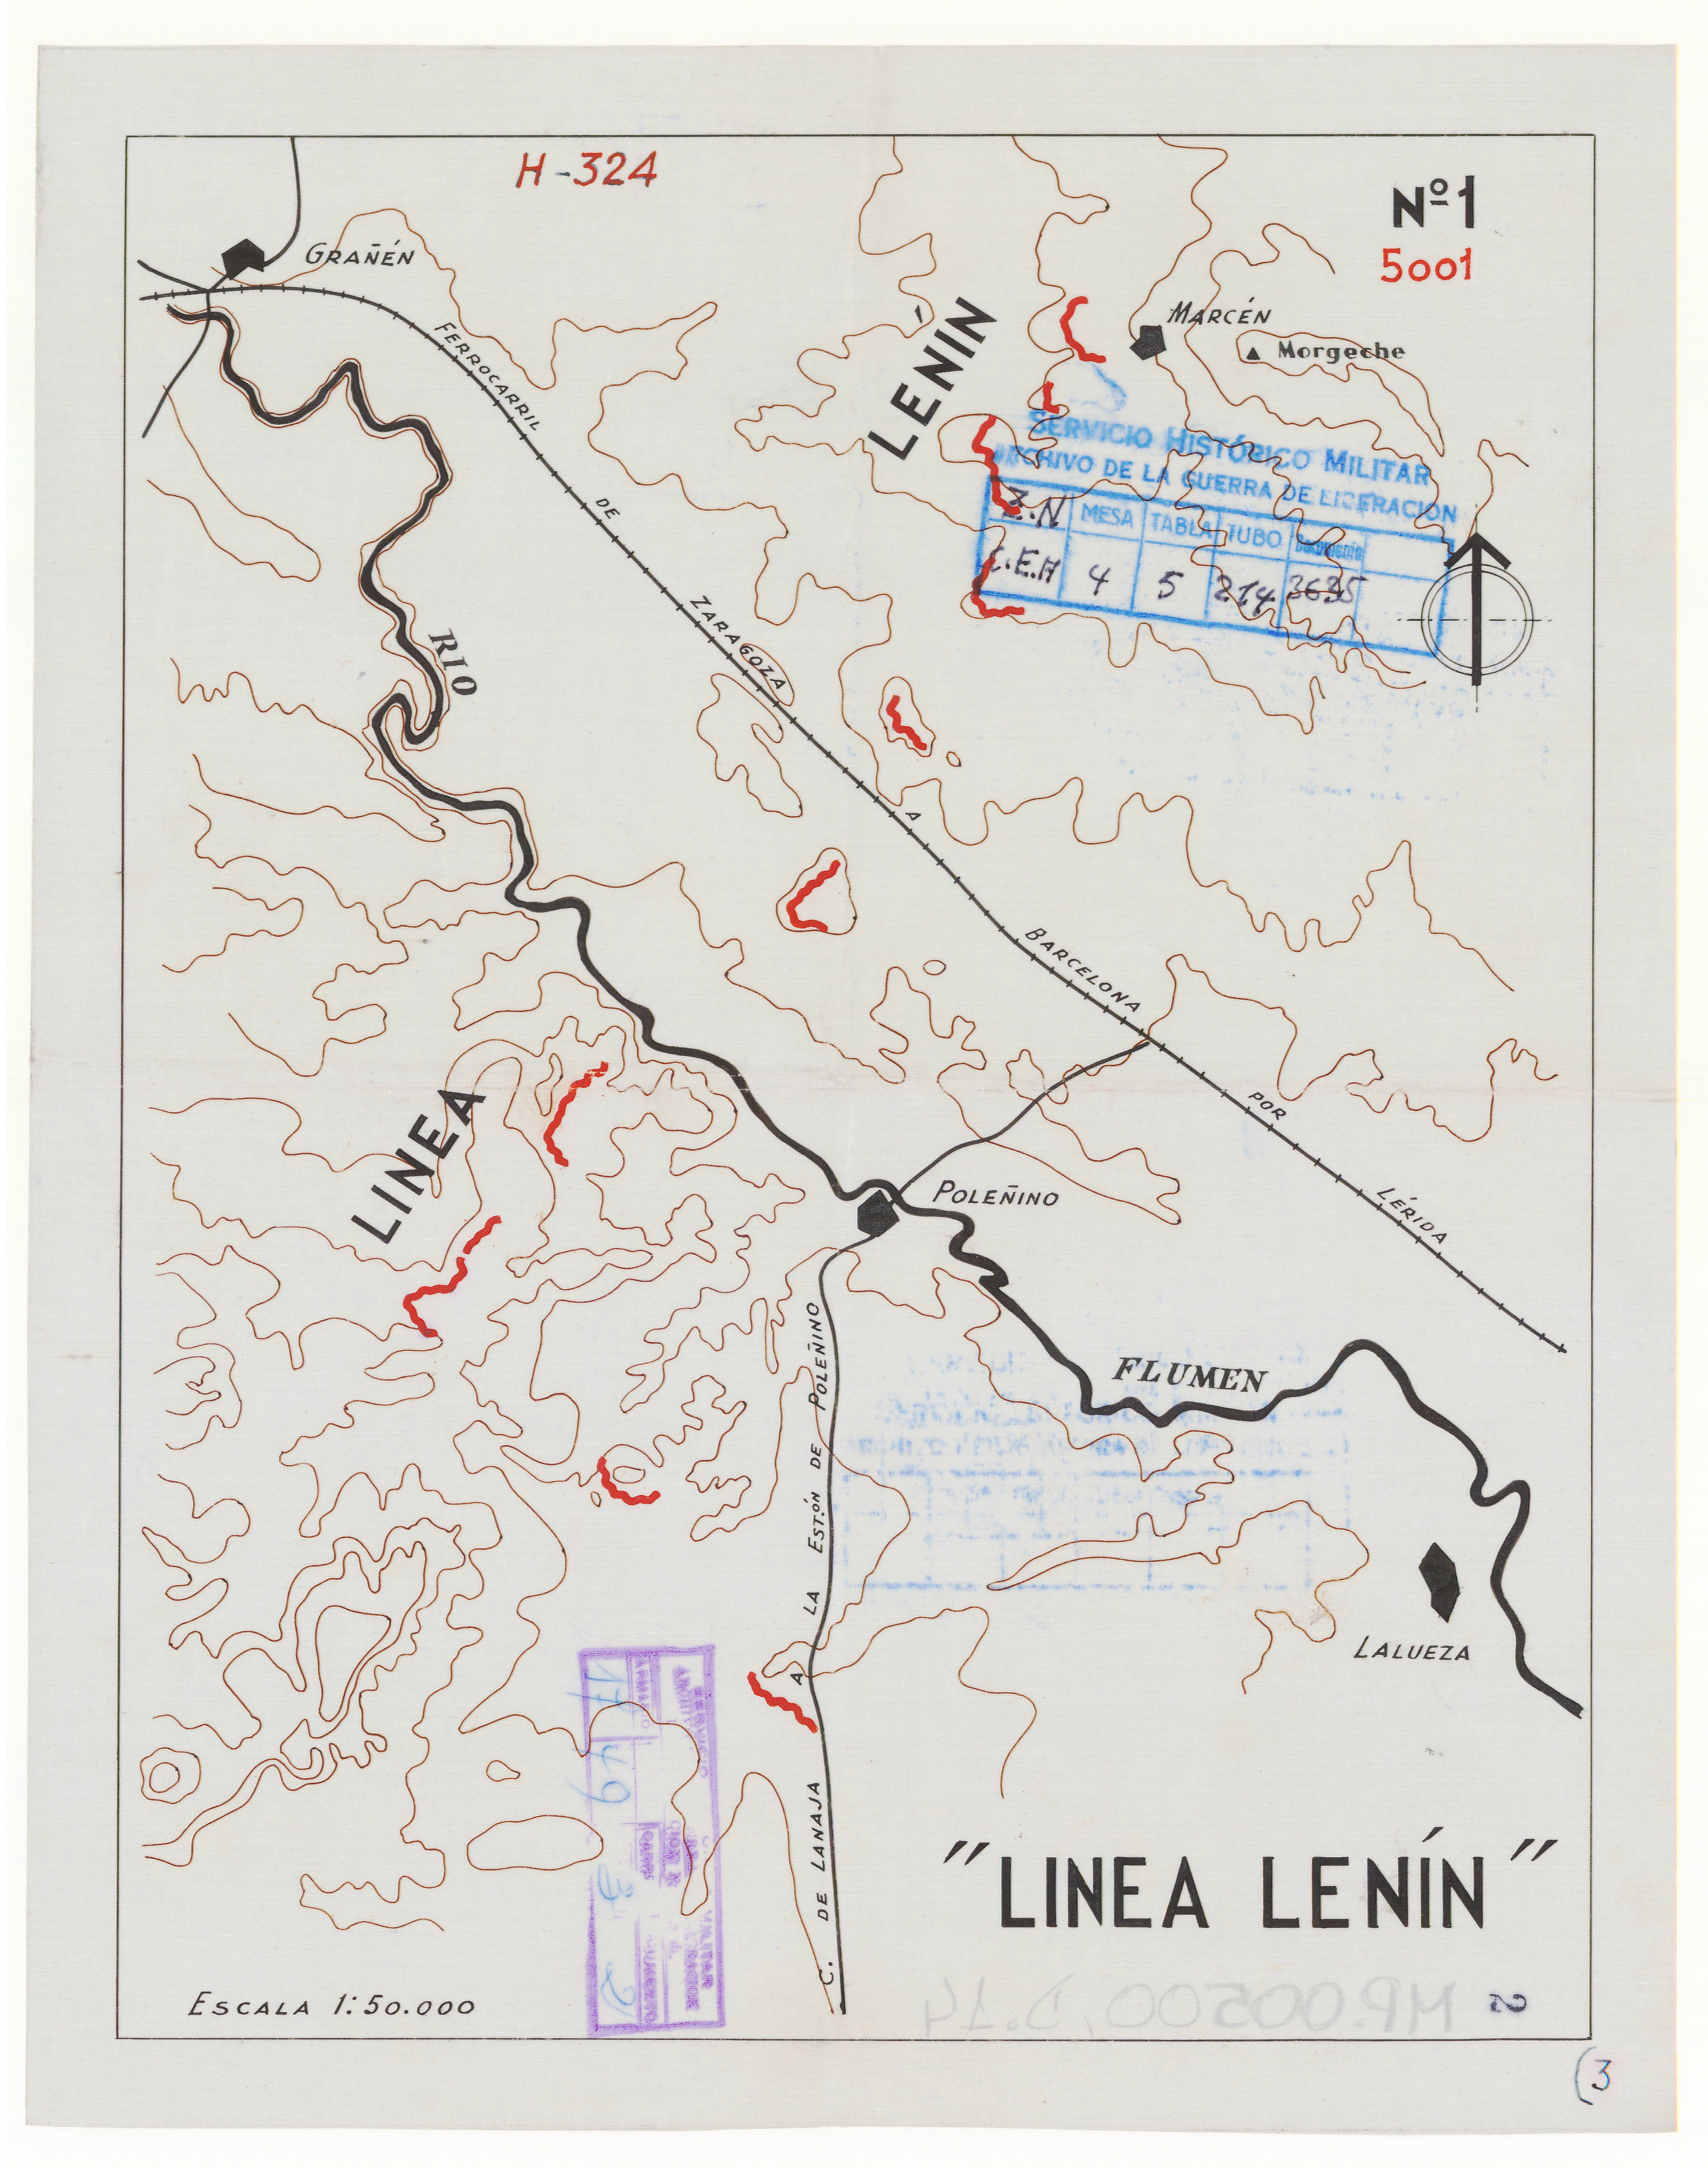 Línea Lenin